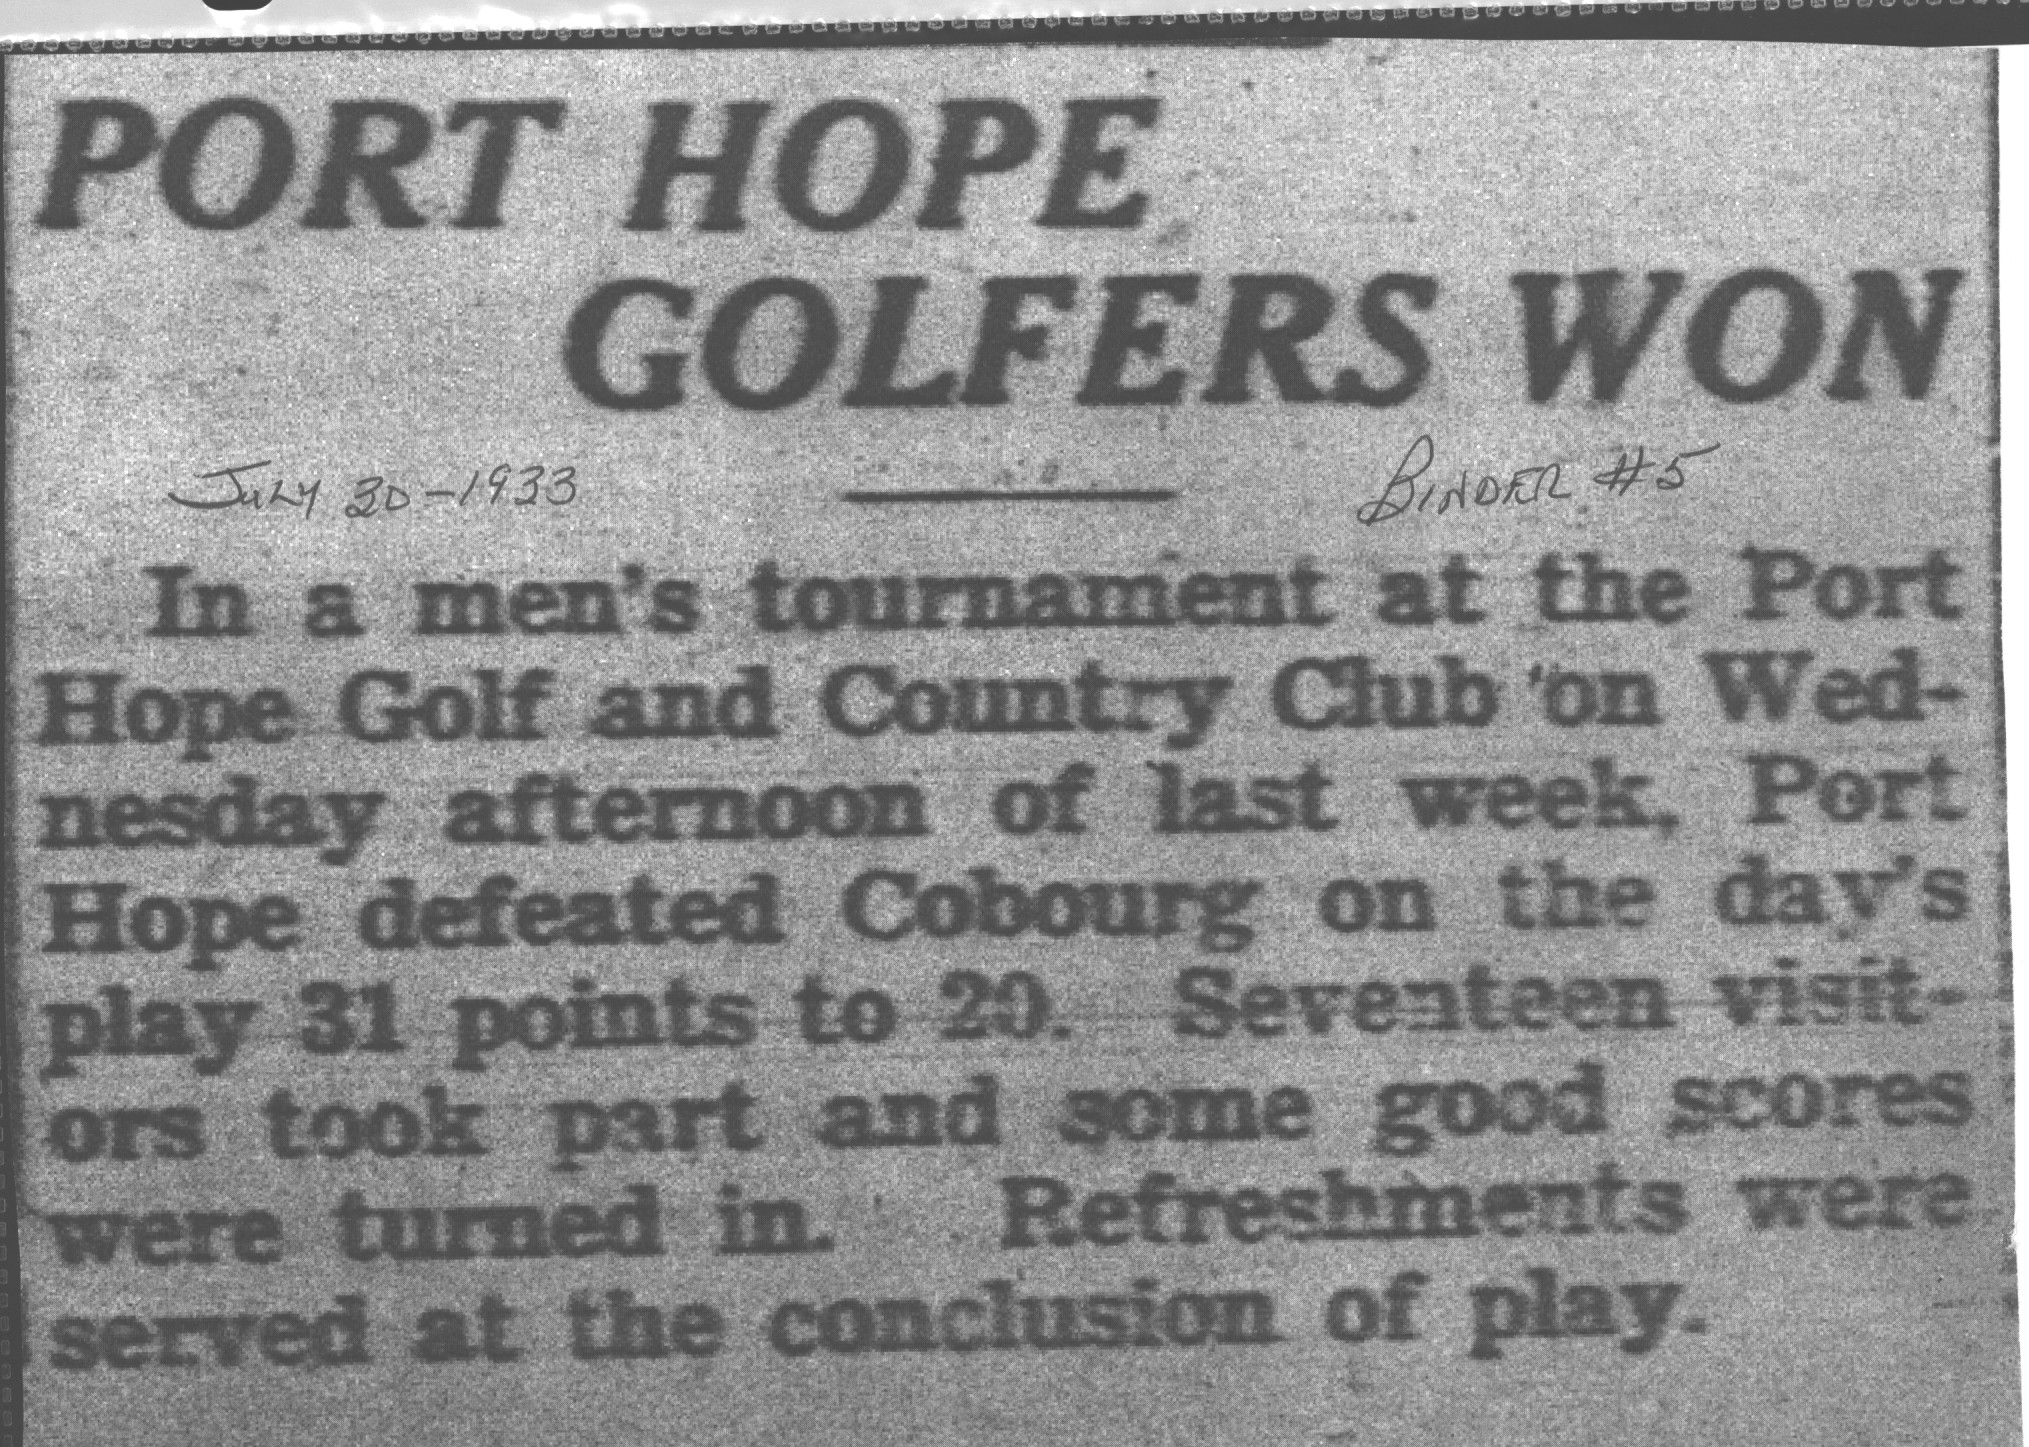 1933-07-30 Golf -Cobourg club at PH